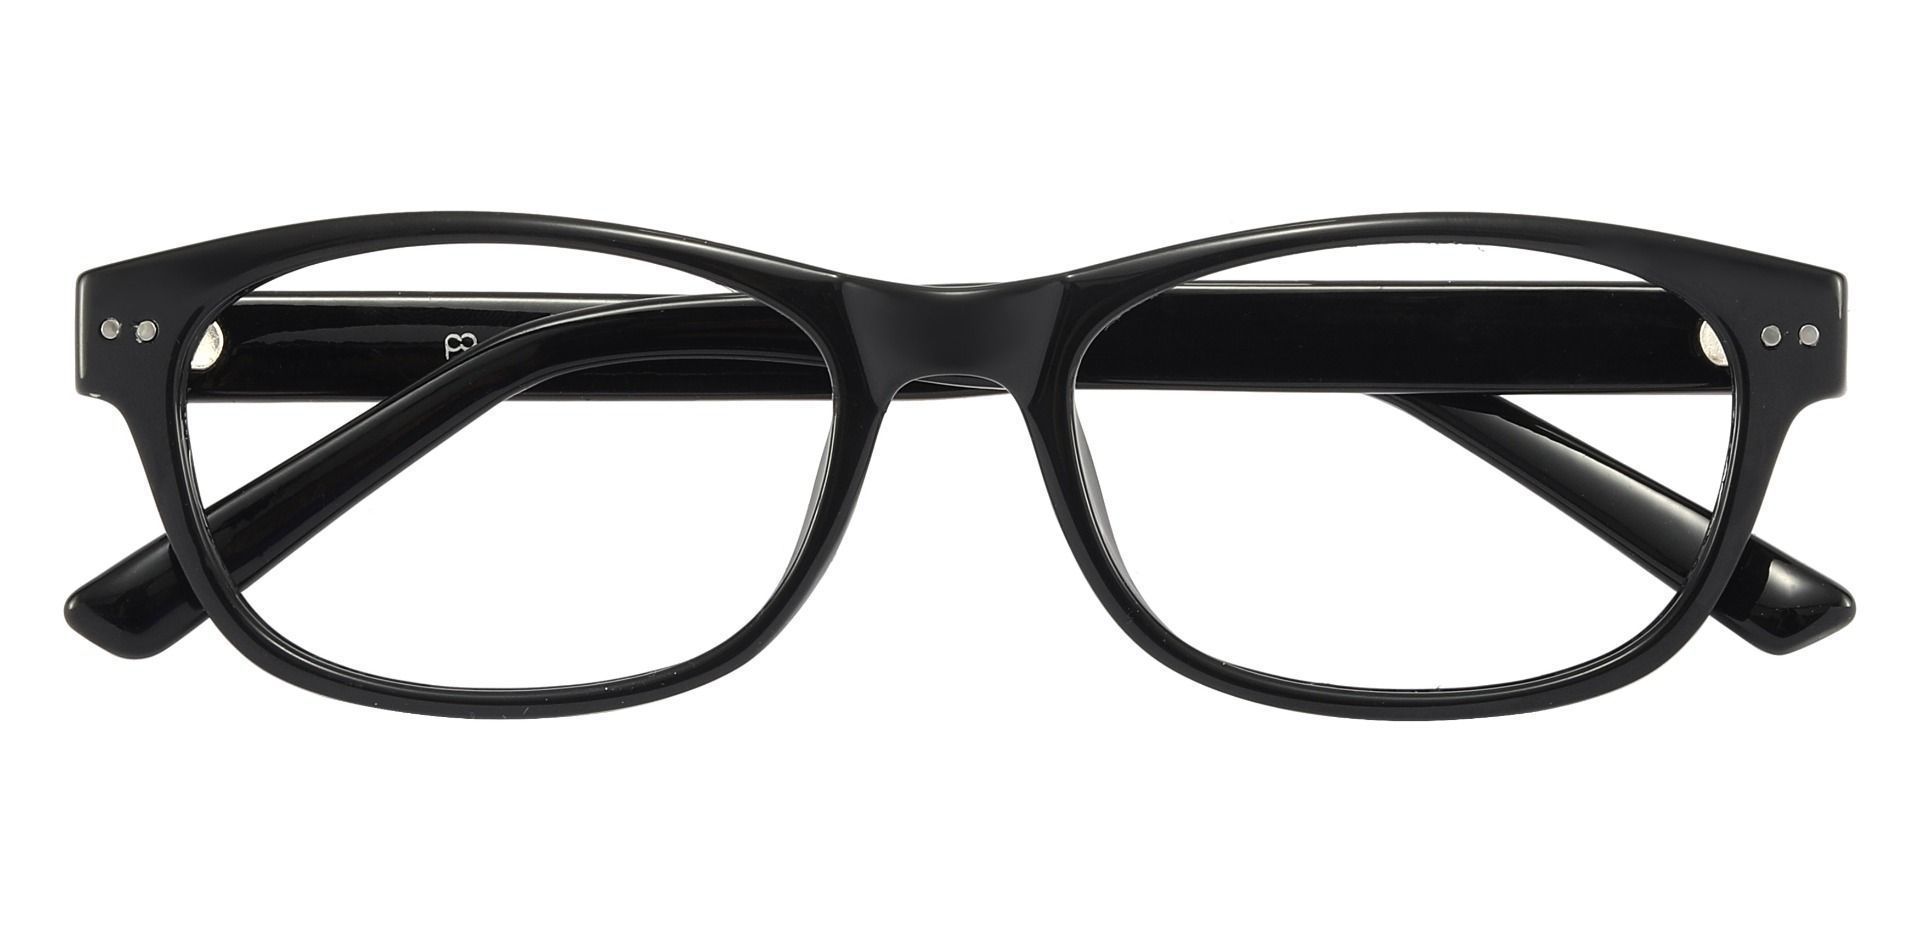 Shaw Oval Progressive Glasses - Black